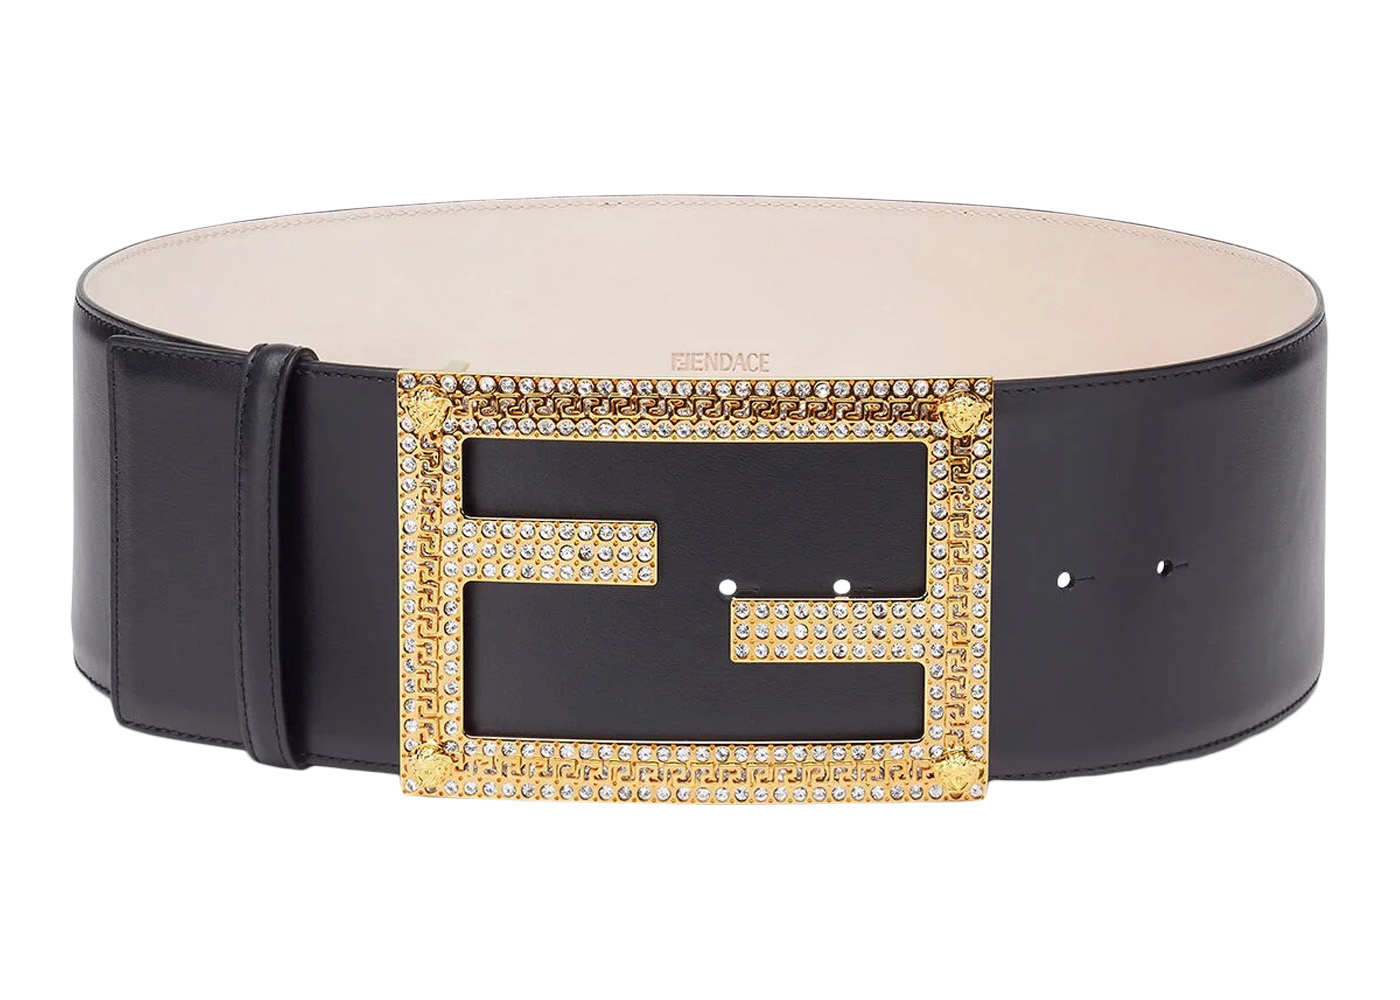 Fendi Fendace Buckle Wide Belt Black in Calfskin Leather with Gold